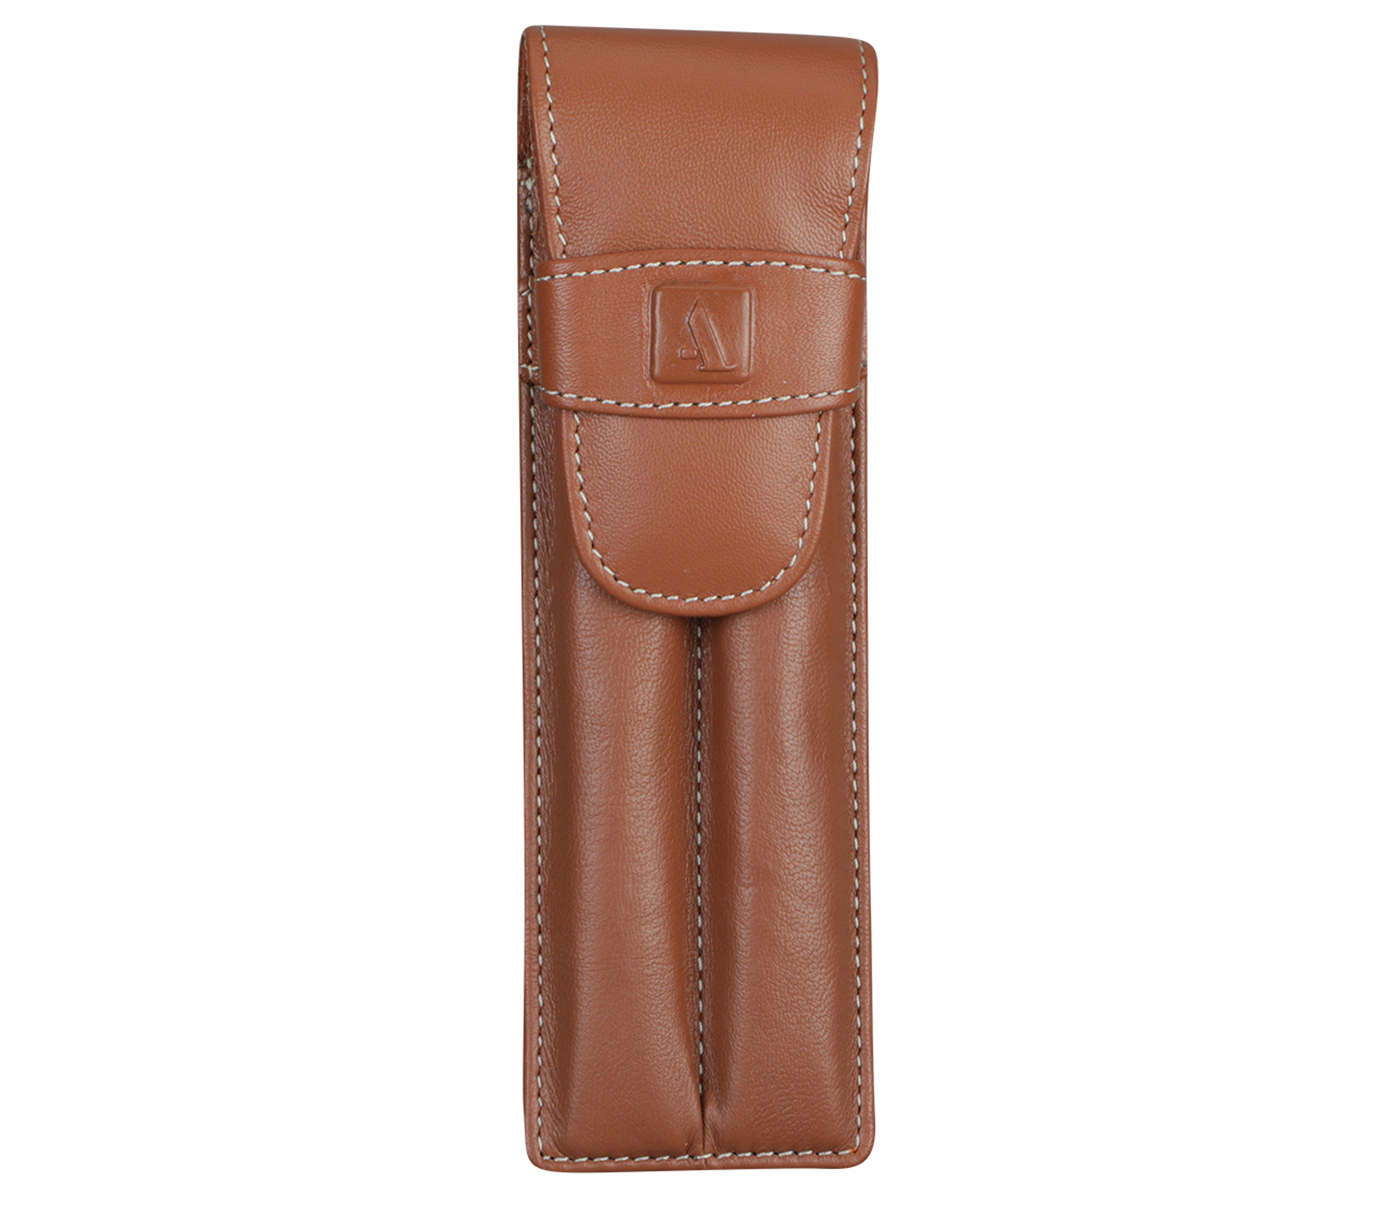  Leather Pen Case(Tan)W51